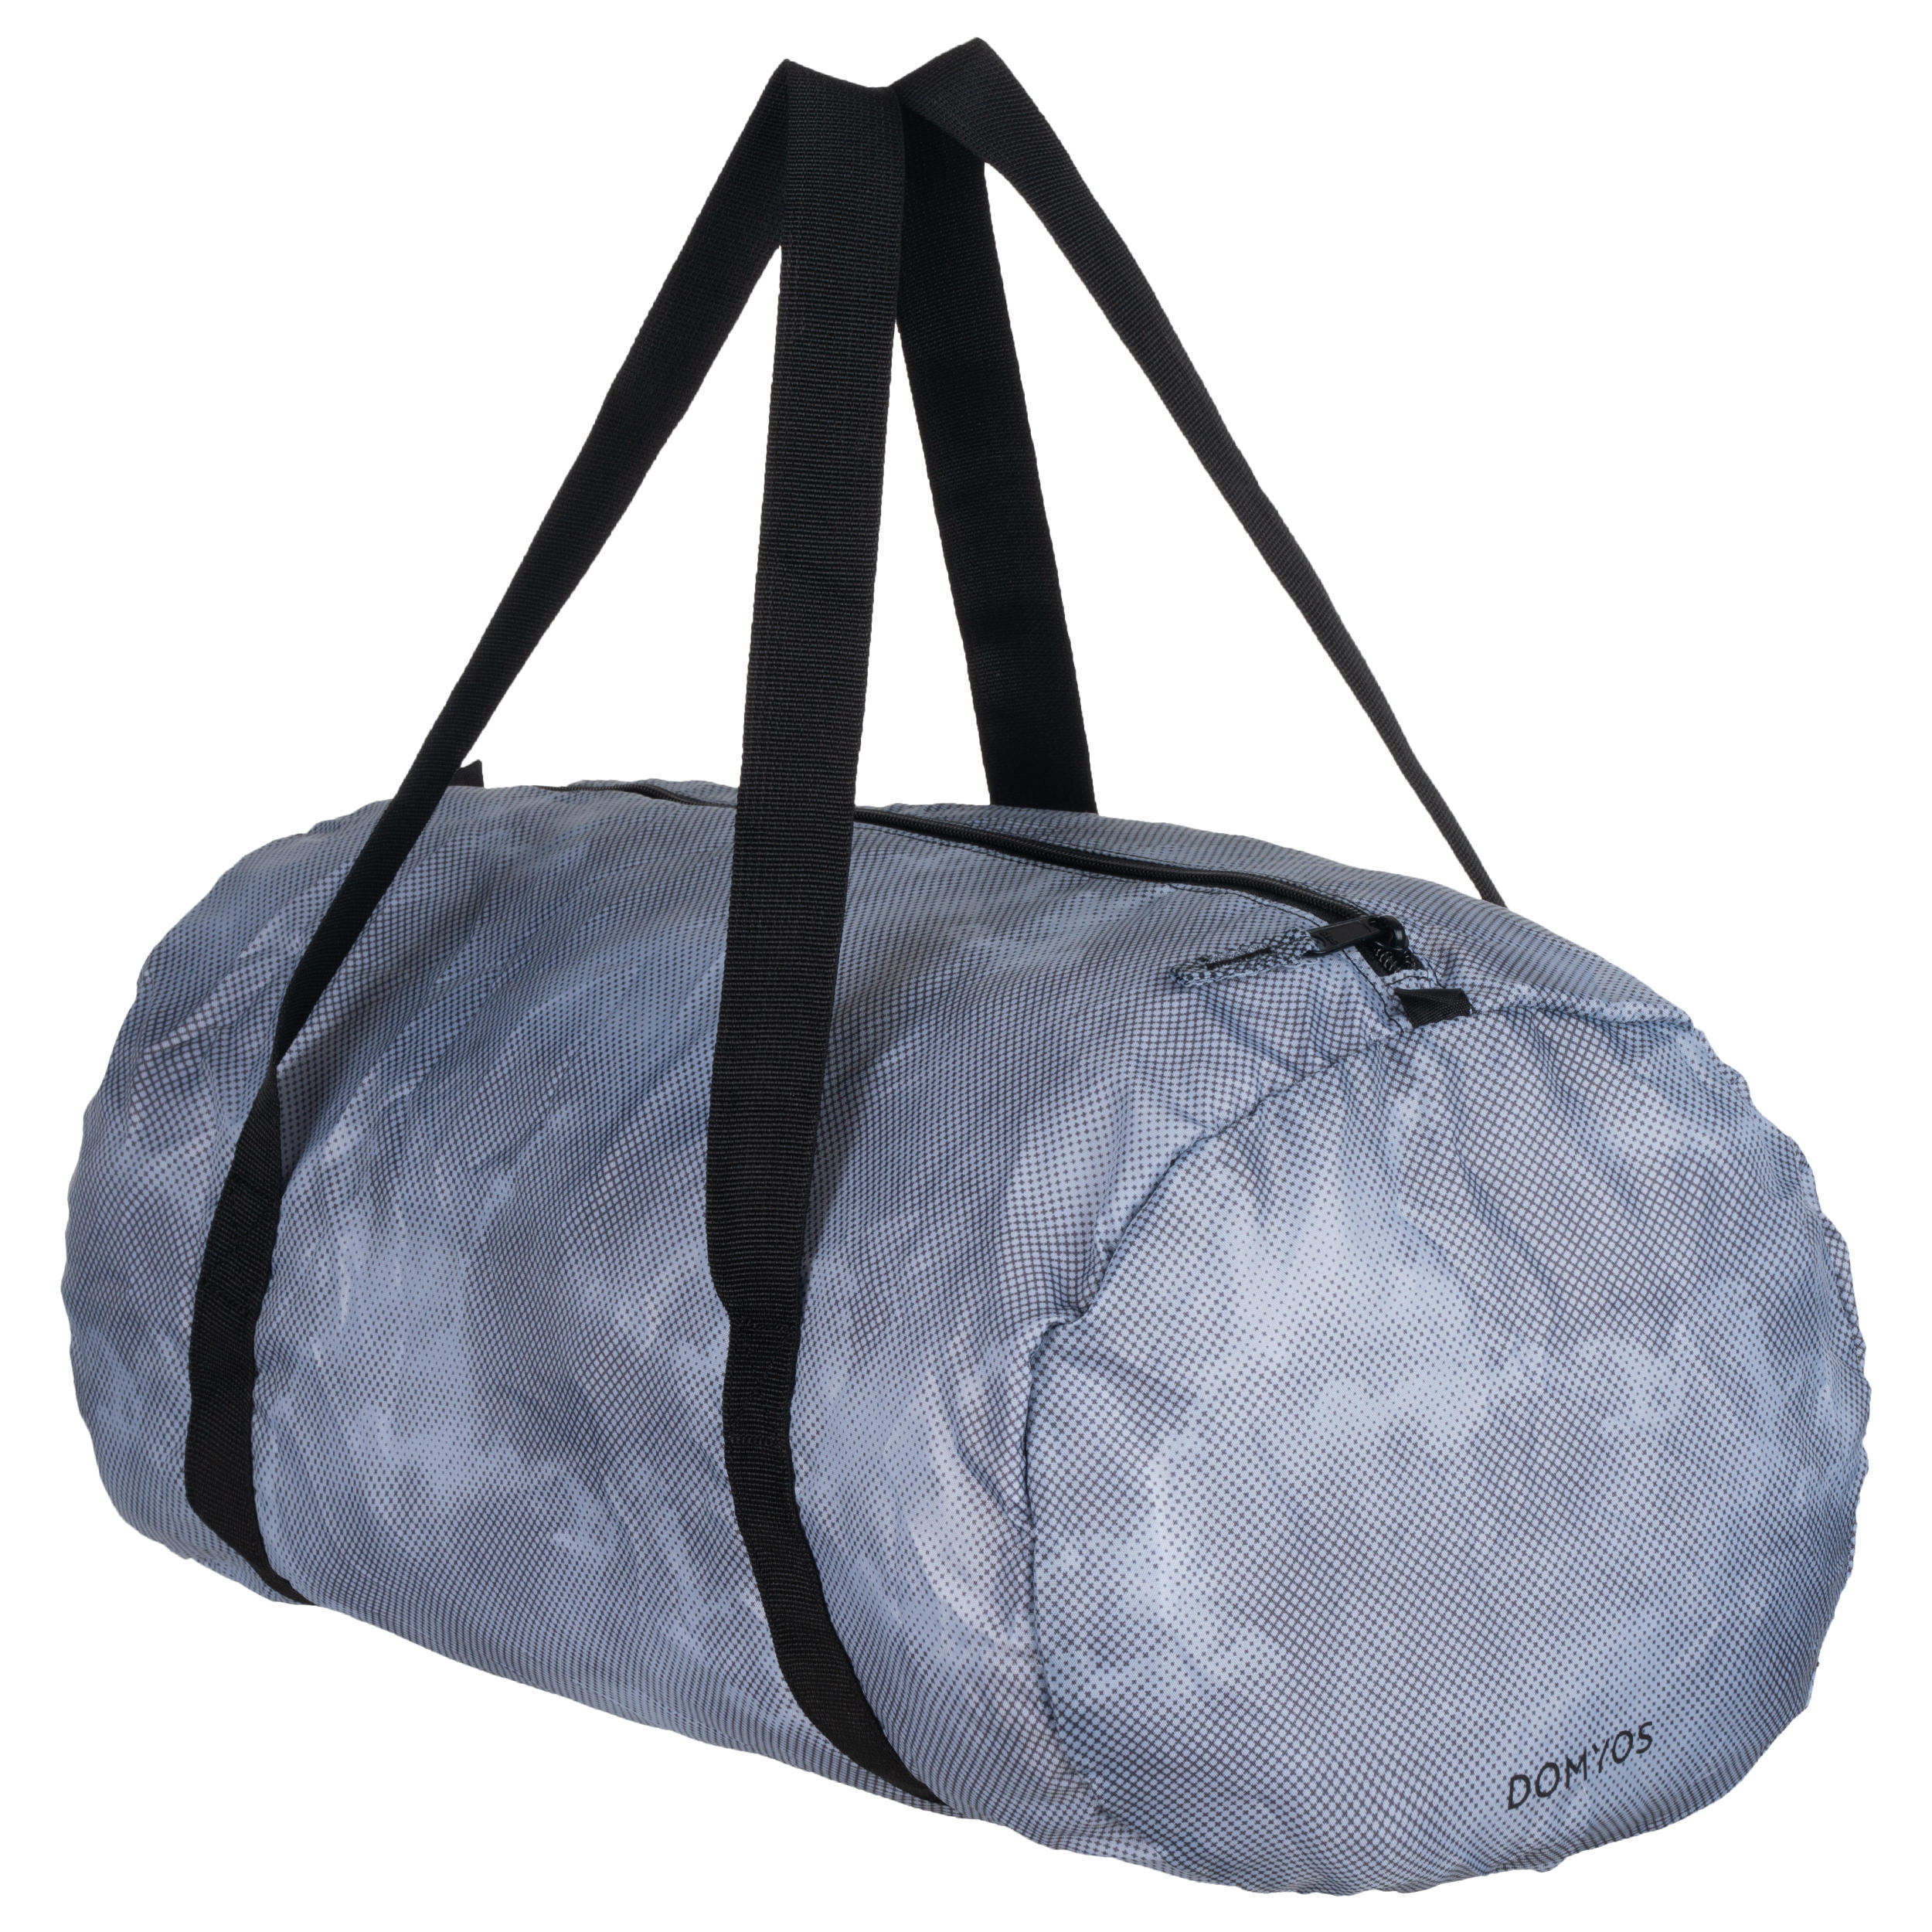 decathlon foldable backpack